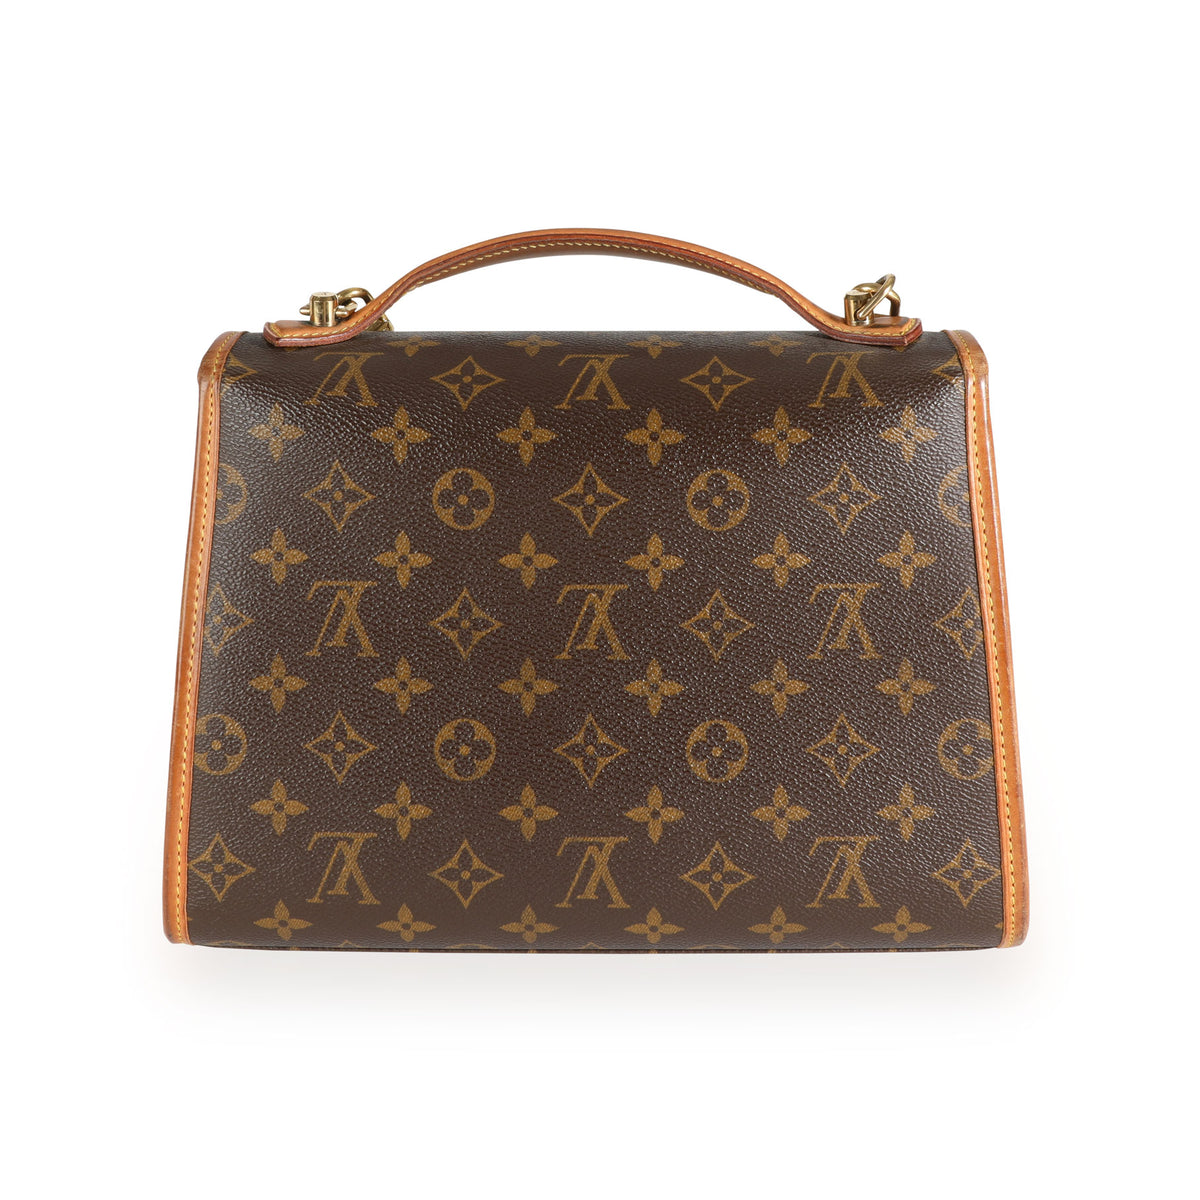 Louis Vuitton Monogram Canvas Bel Air Bag